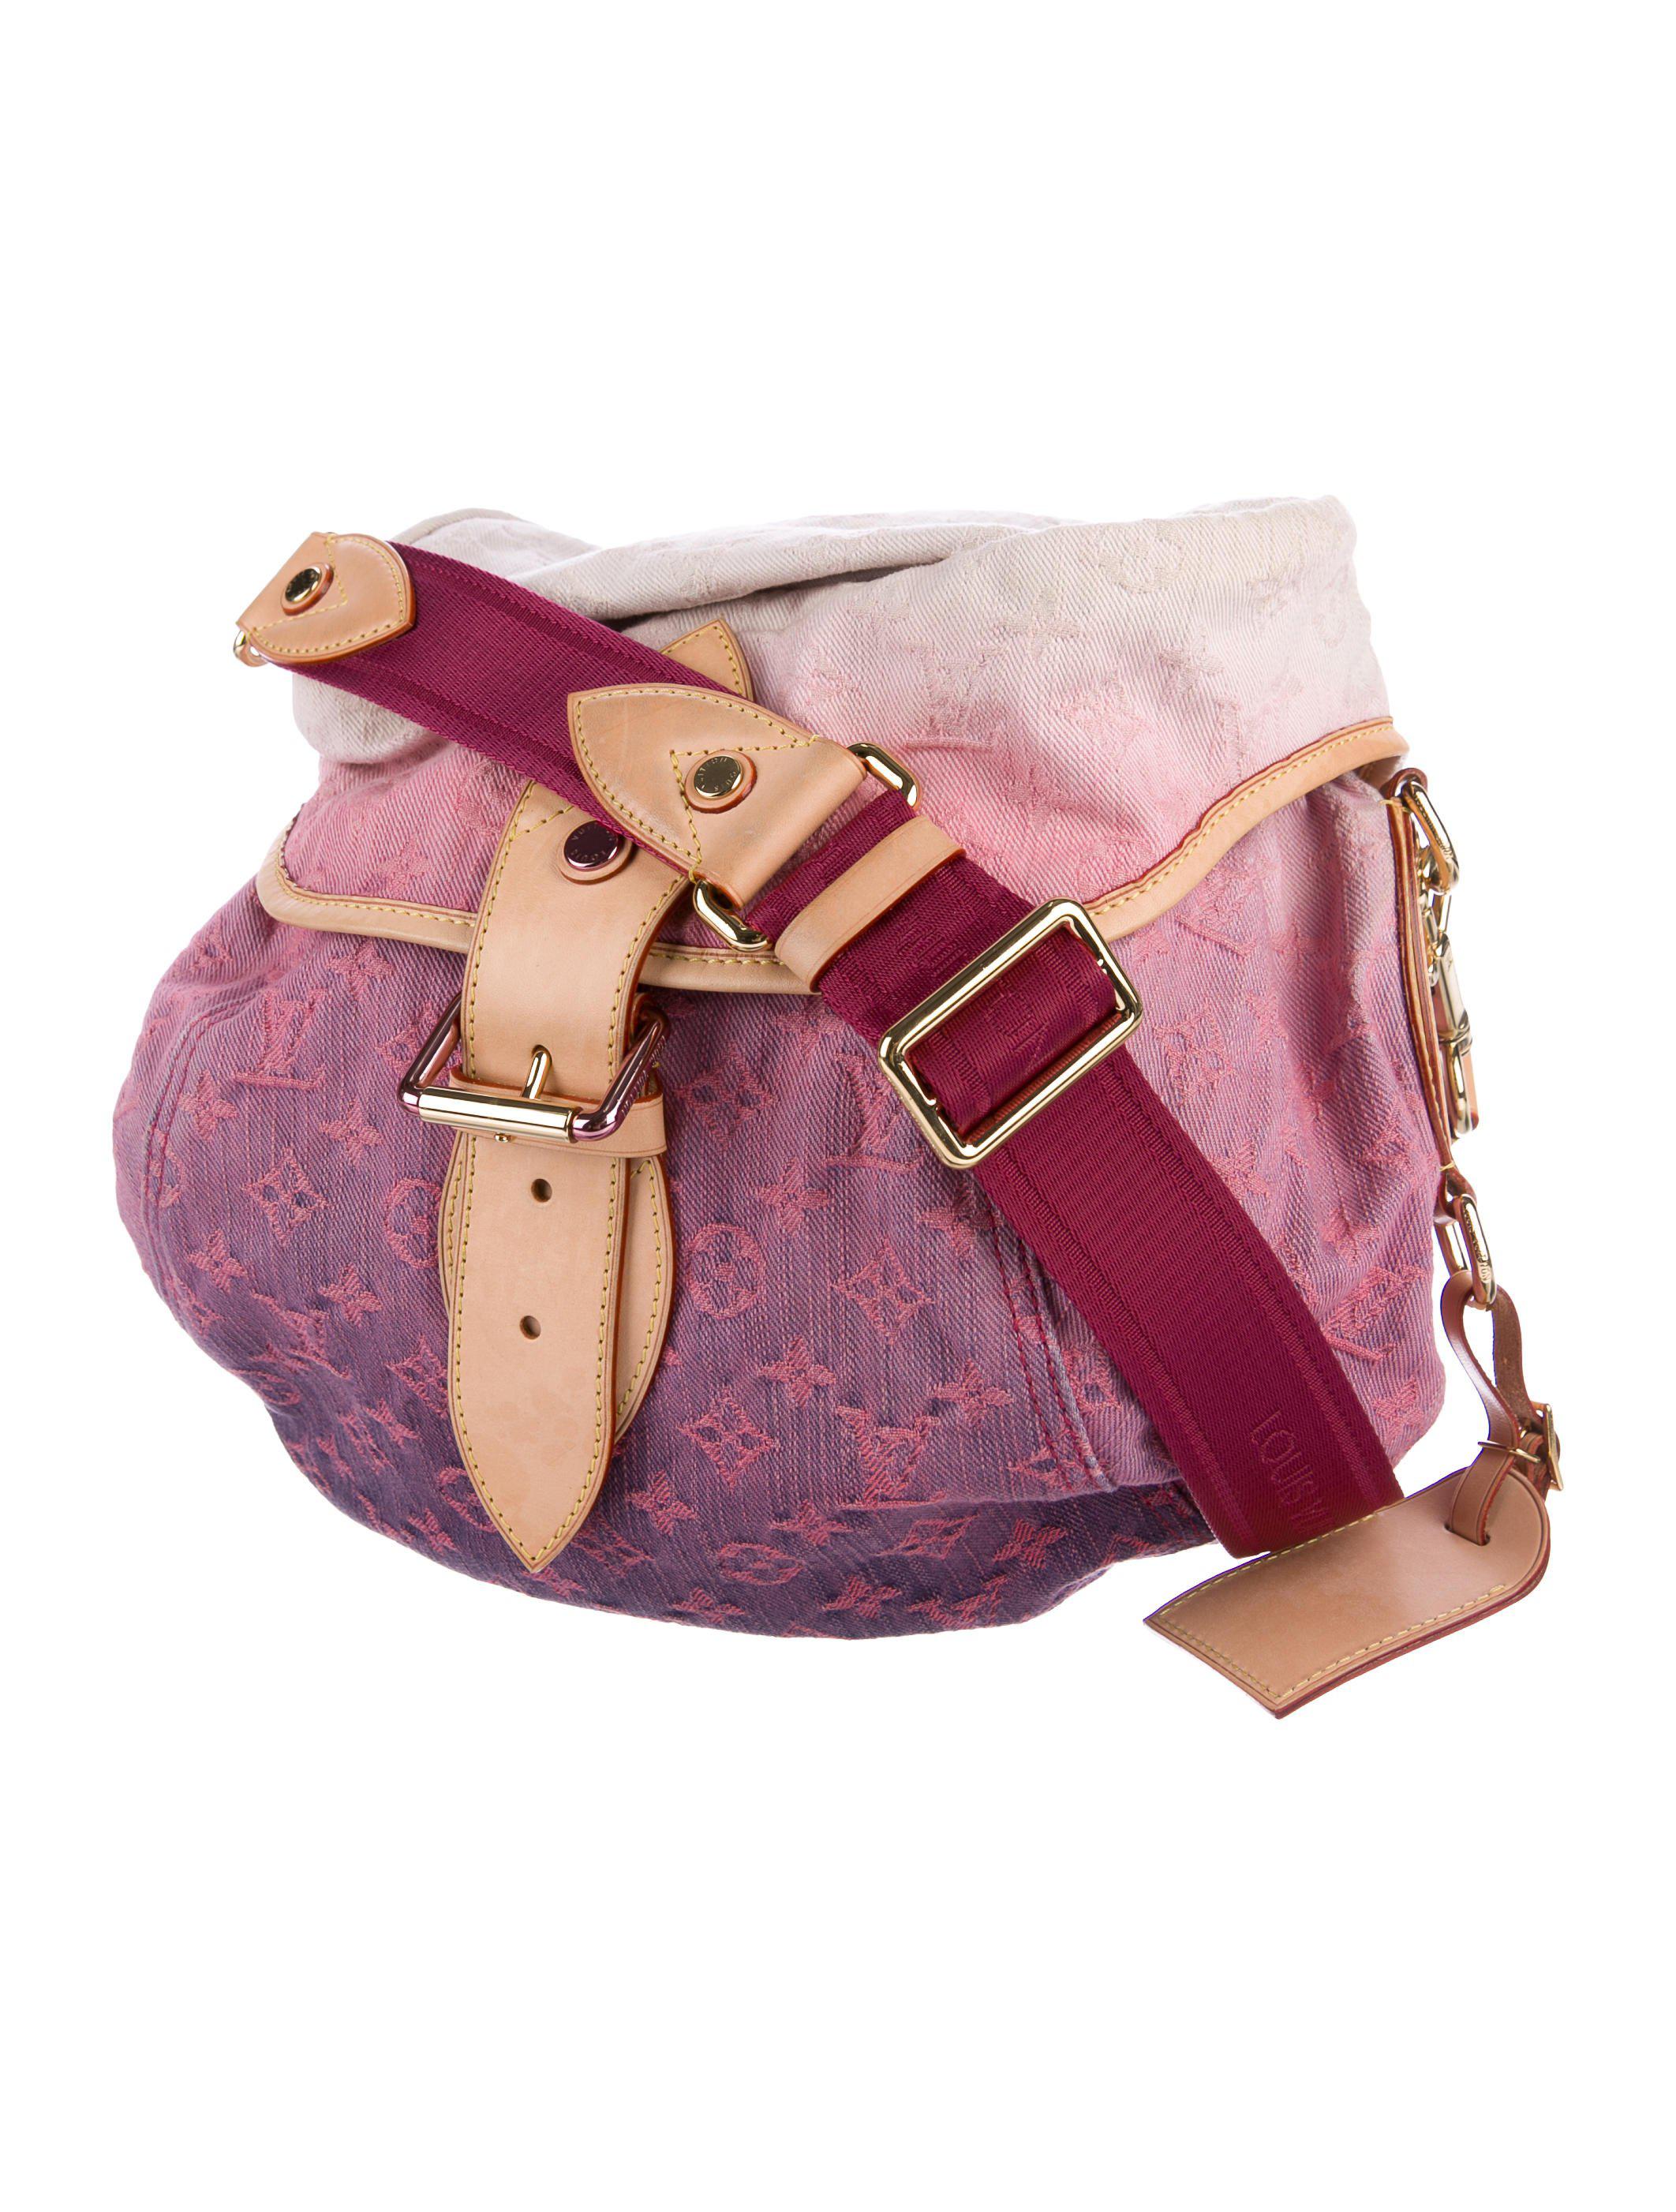 Lyst - Louis Vuitton Denim Sunshine Bag Pink in Natural